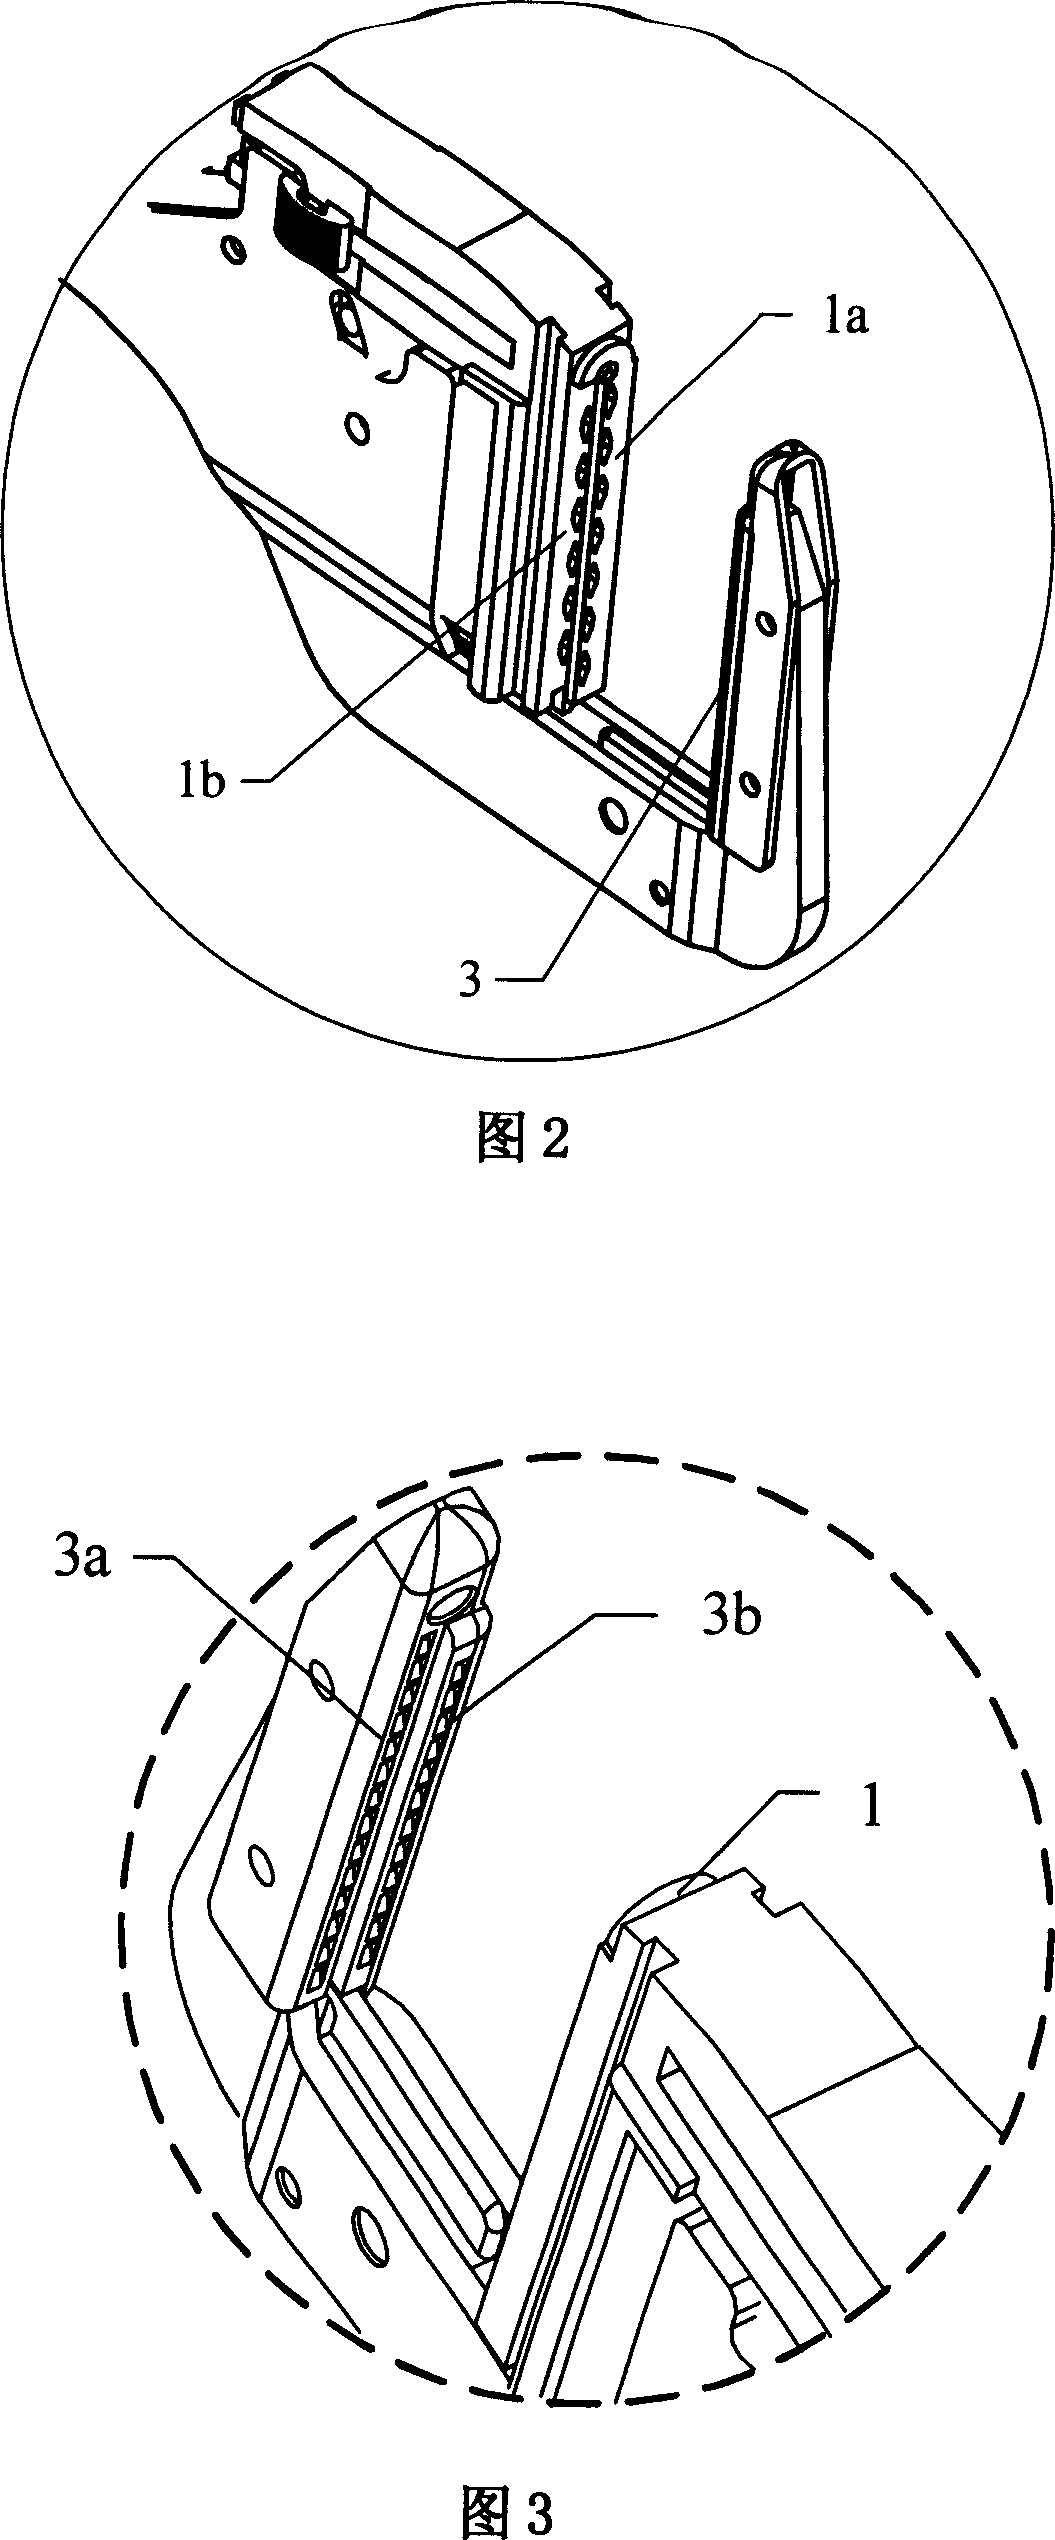 Surgical binding instrument binding mechanism